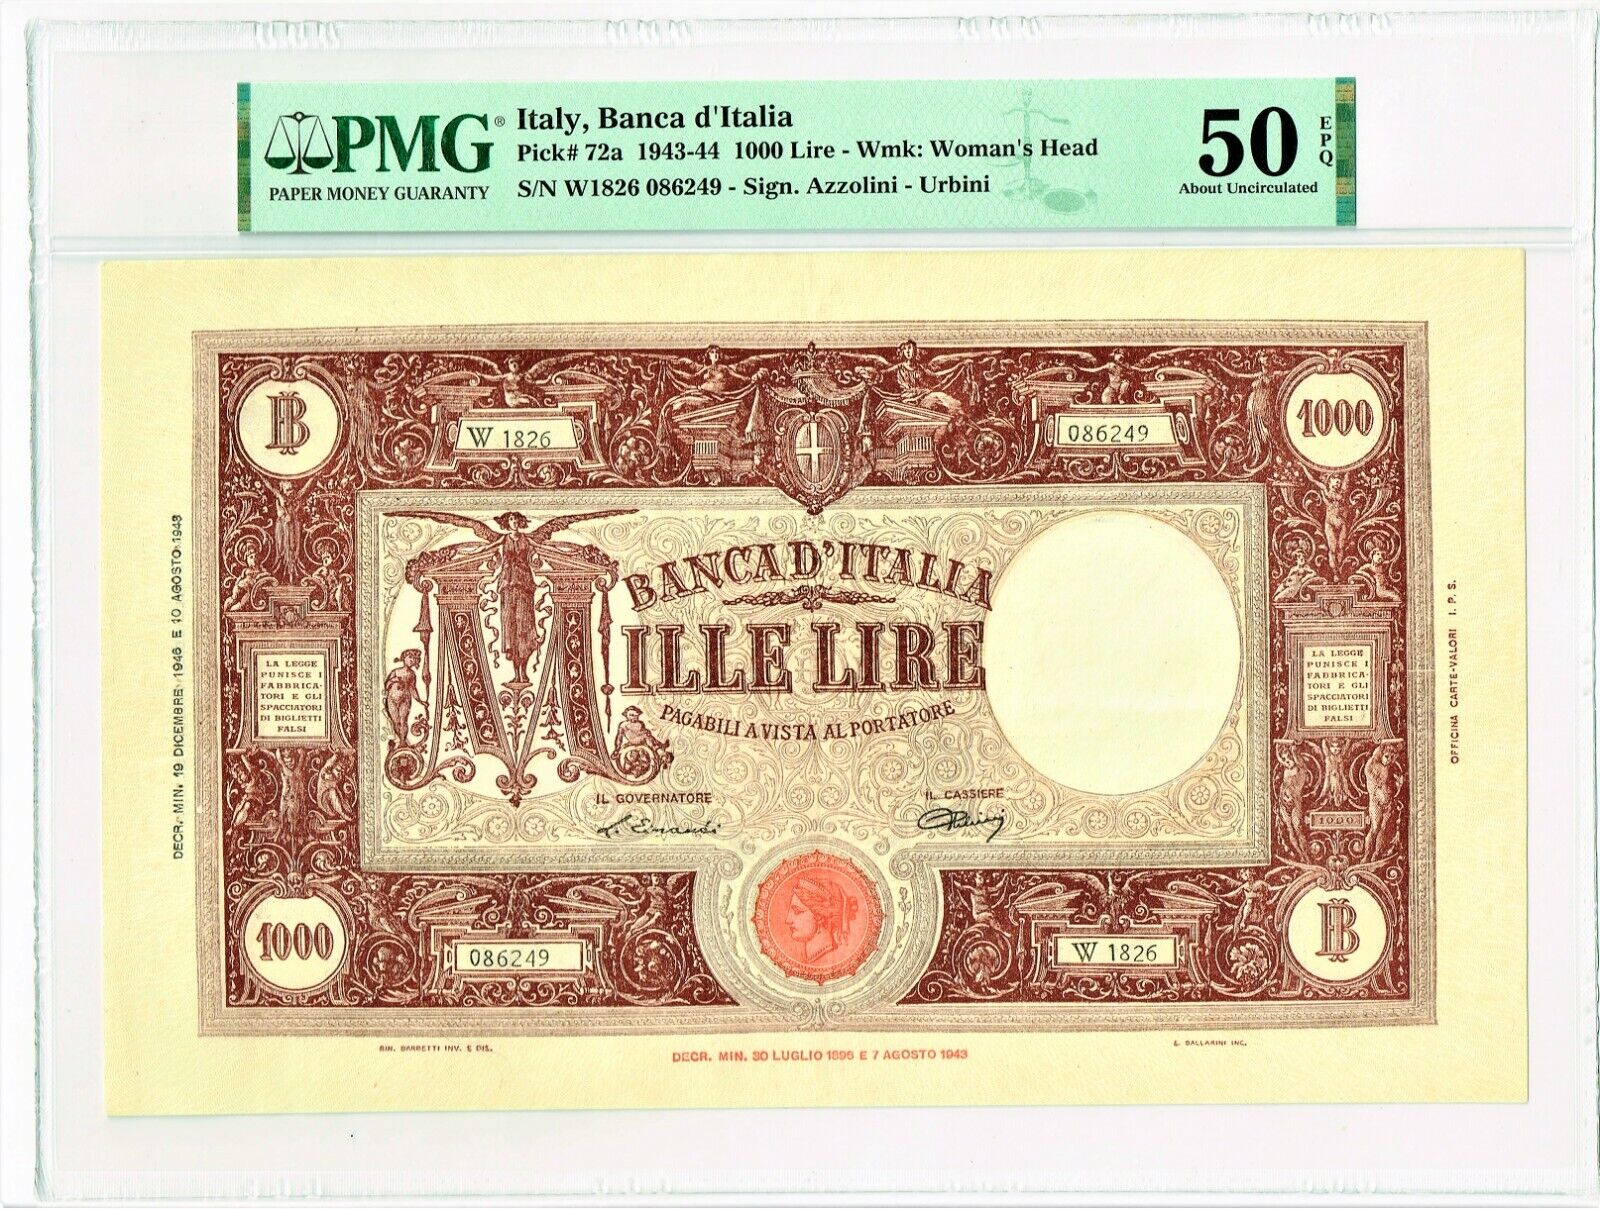 Italy Banco D'italia 1000 Lire 10.8.1943 Pick 72a Pmg About Uncirculated 50 Epq.